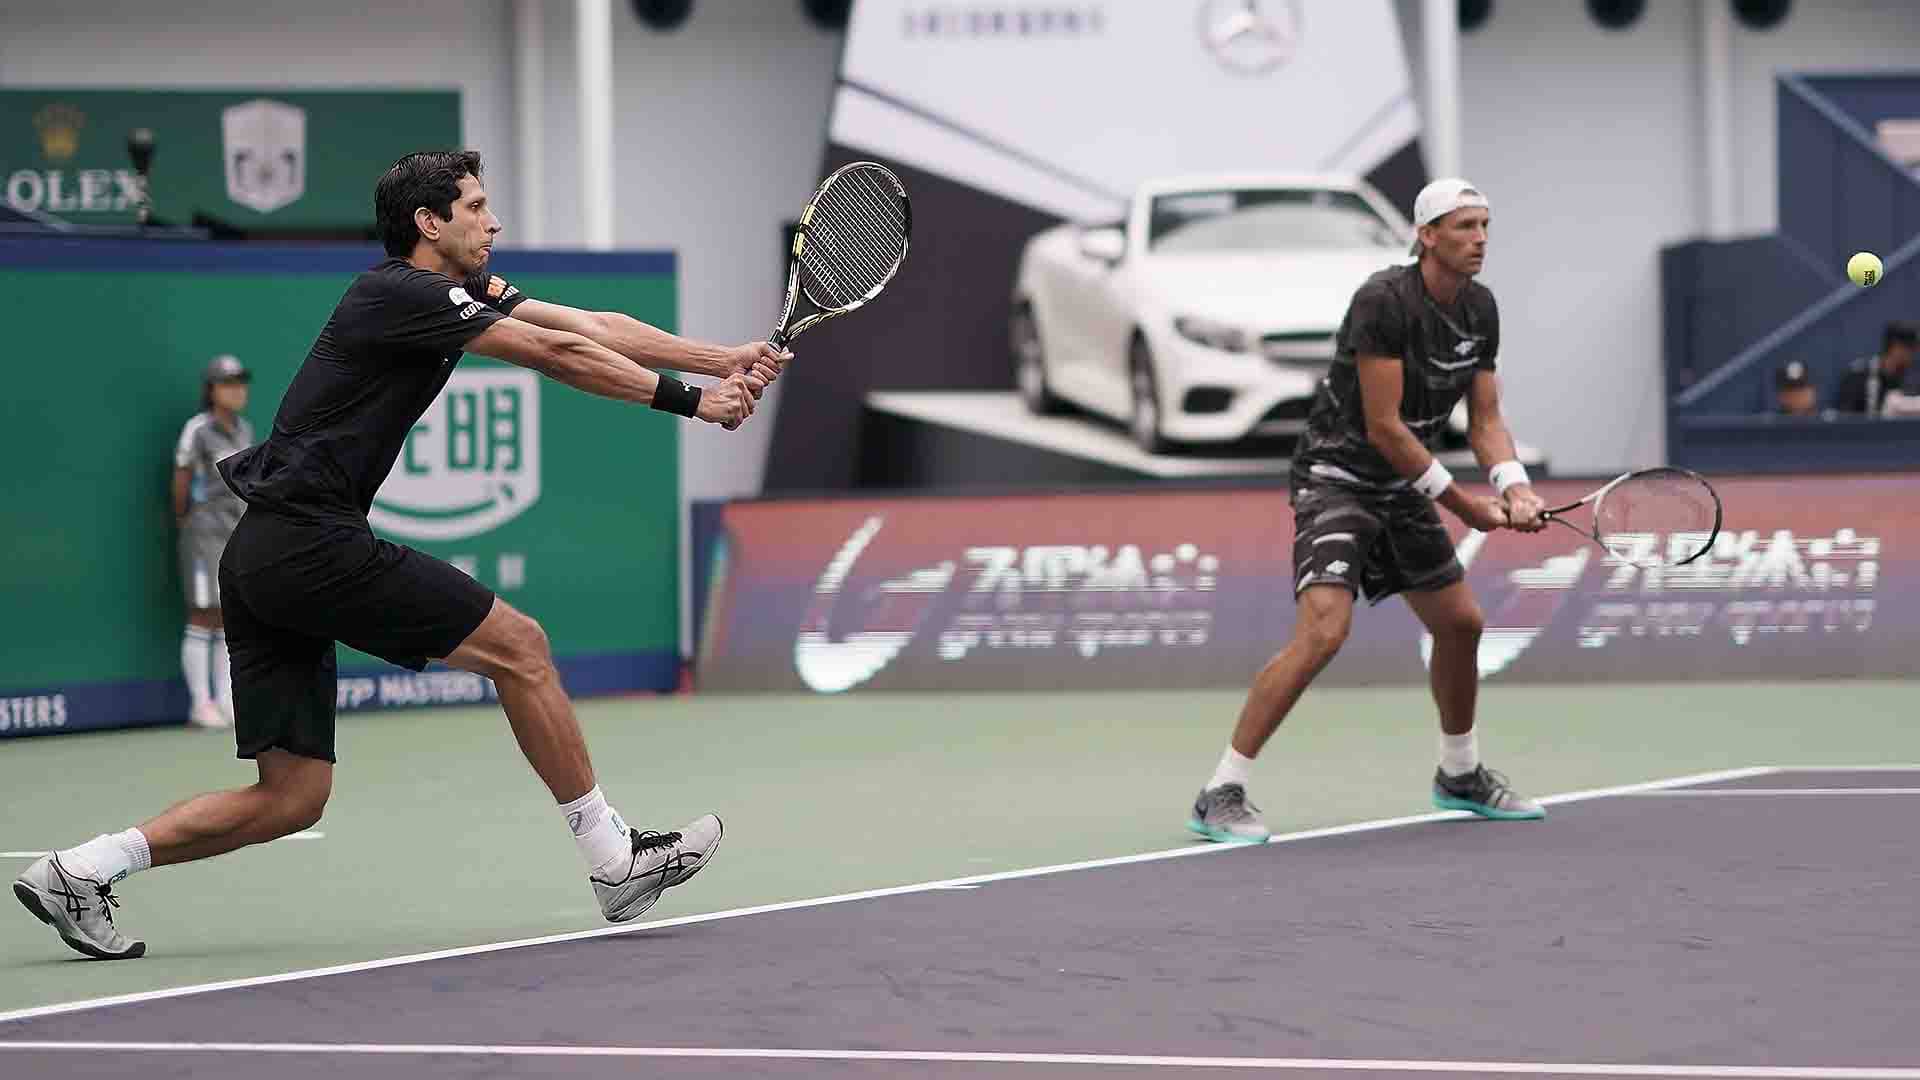 shanghai open 2018 tennis